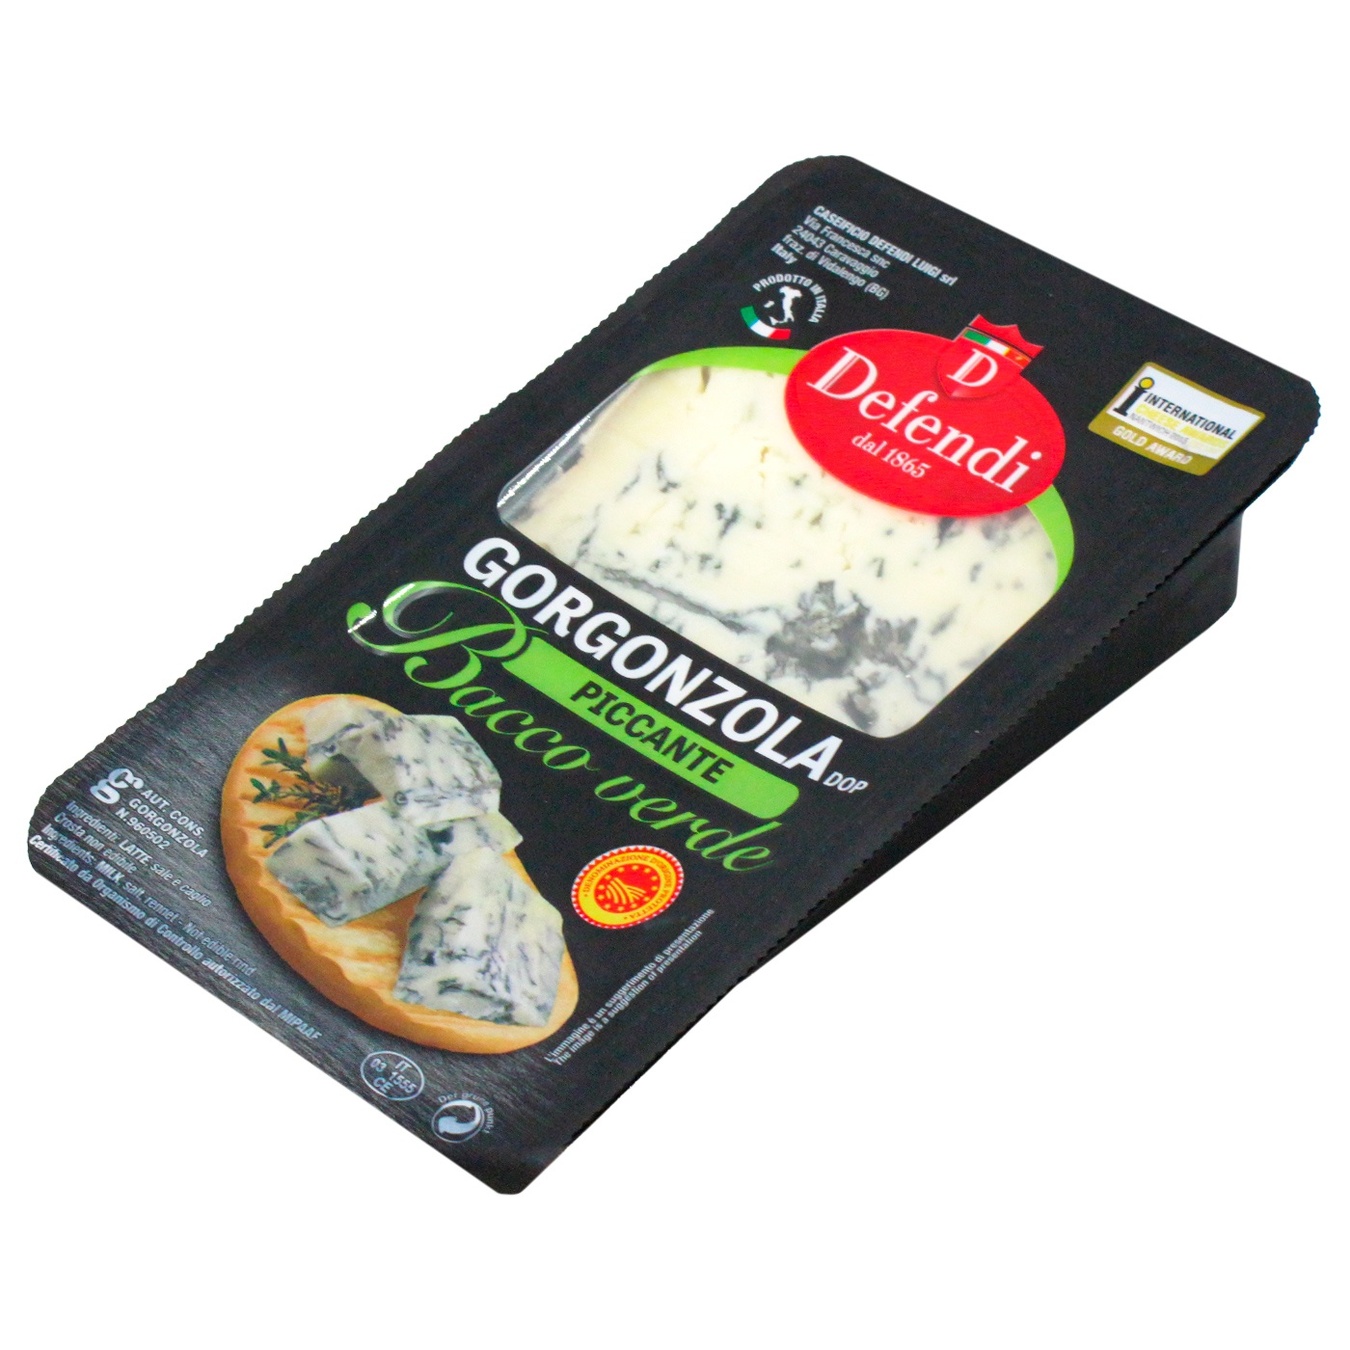 Gorgonzola DOP Piccante "Bacco Verde" - Super Gold bei Word Cheese Award